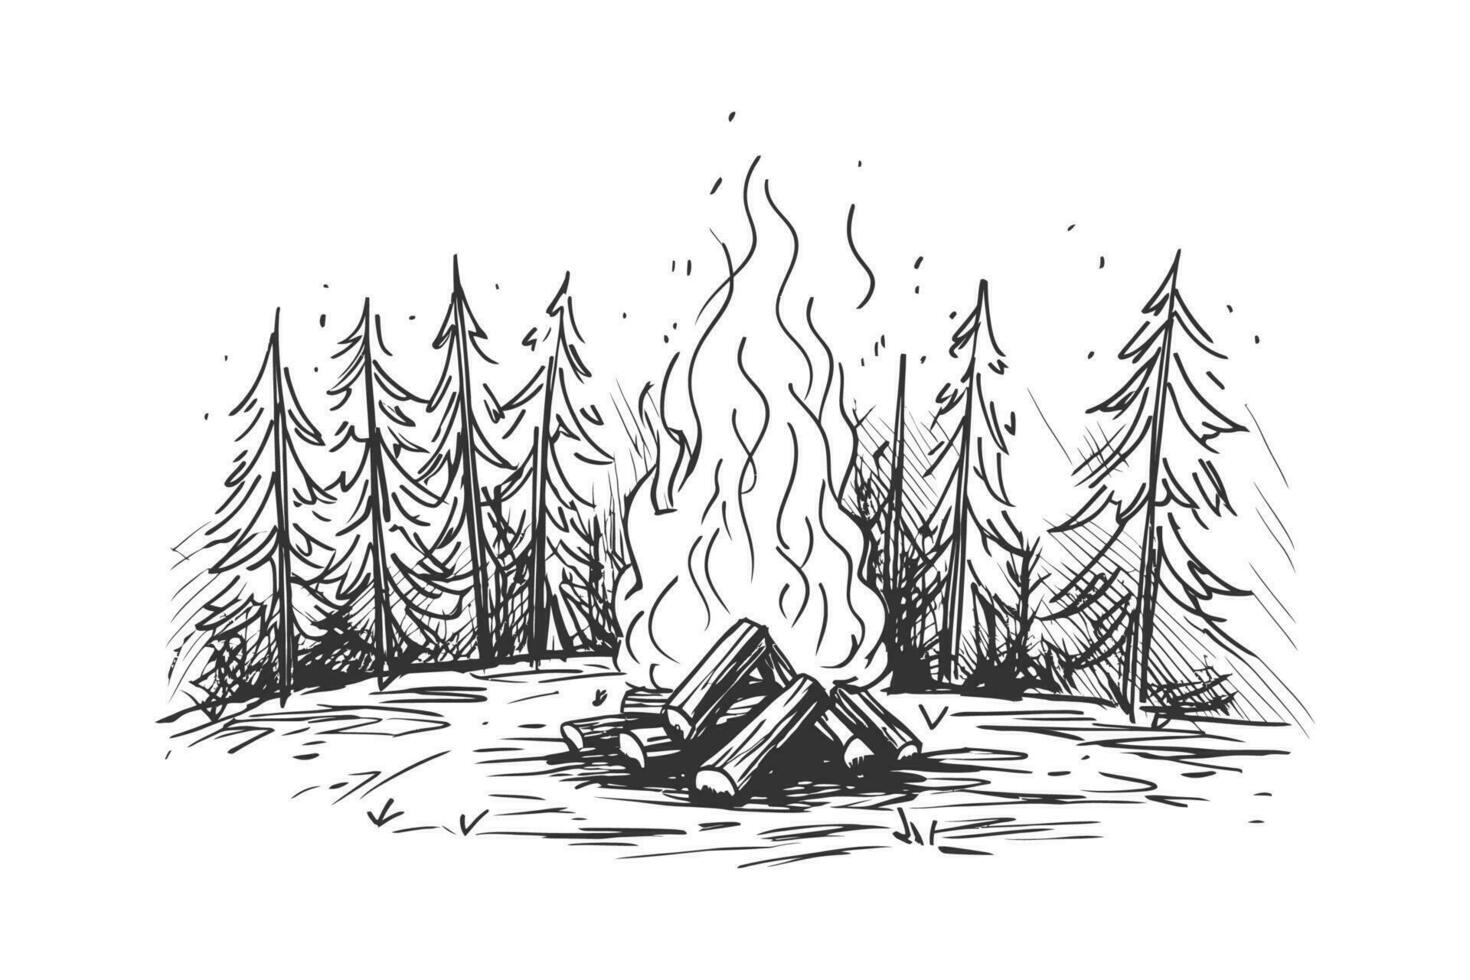 Bonfire burning in the forest sketch hand drawn. Vector illustration design.